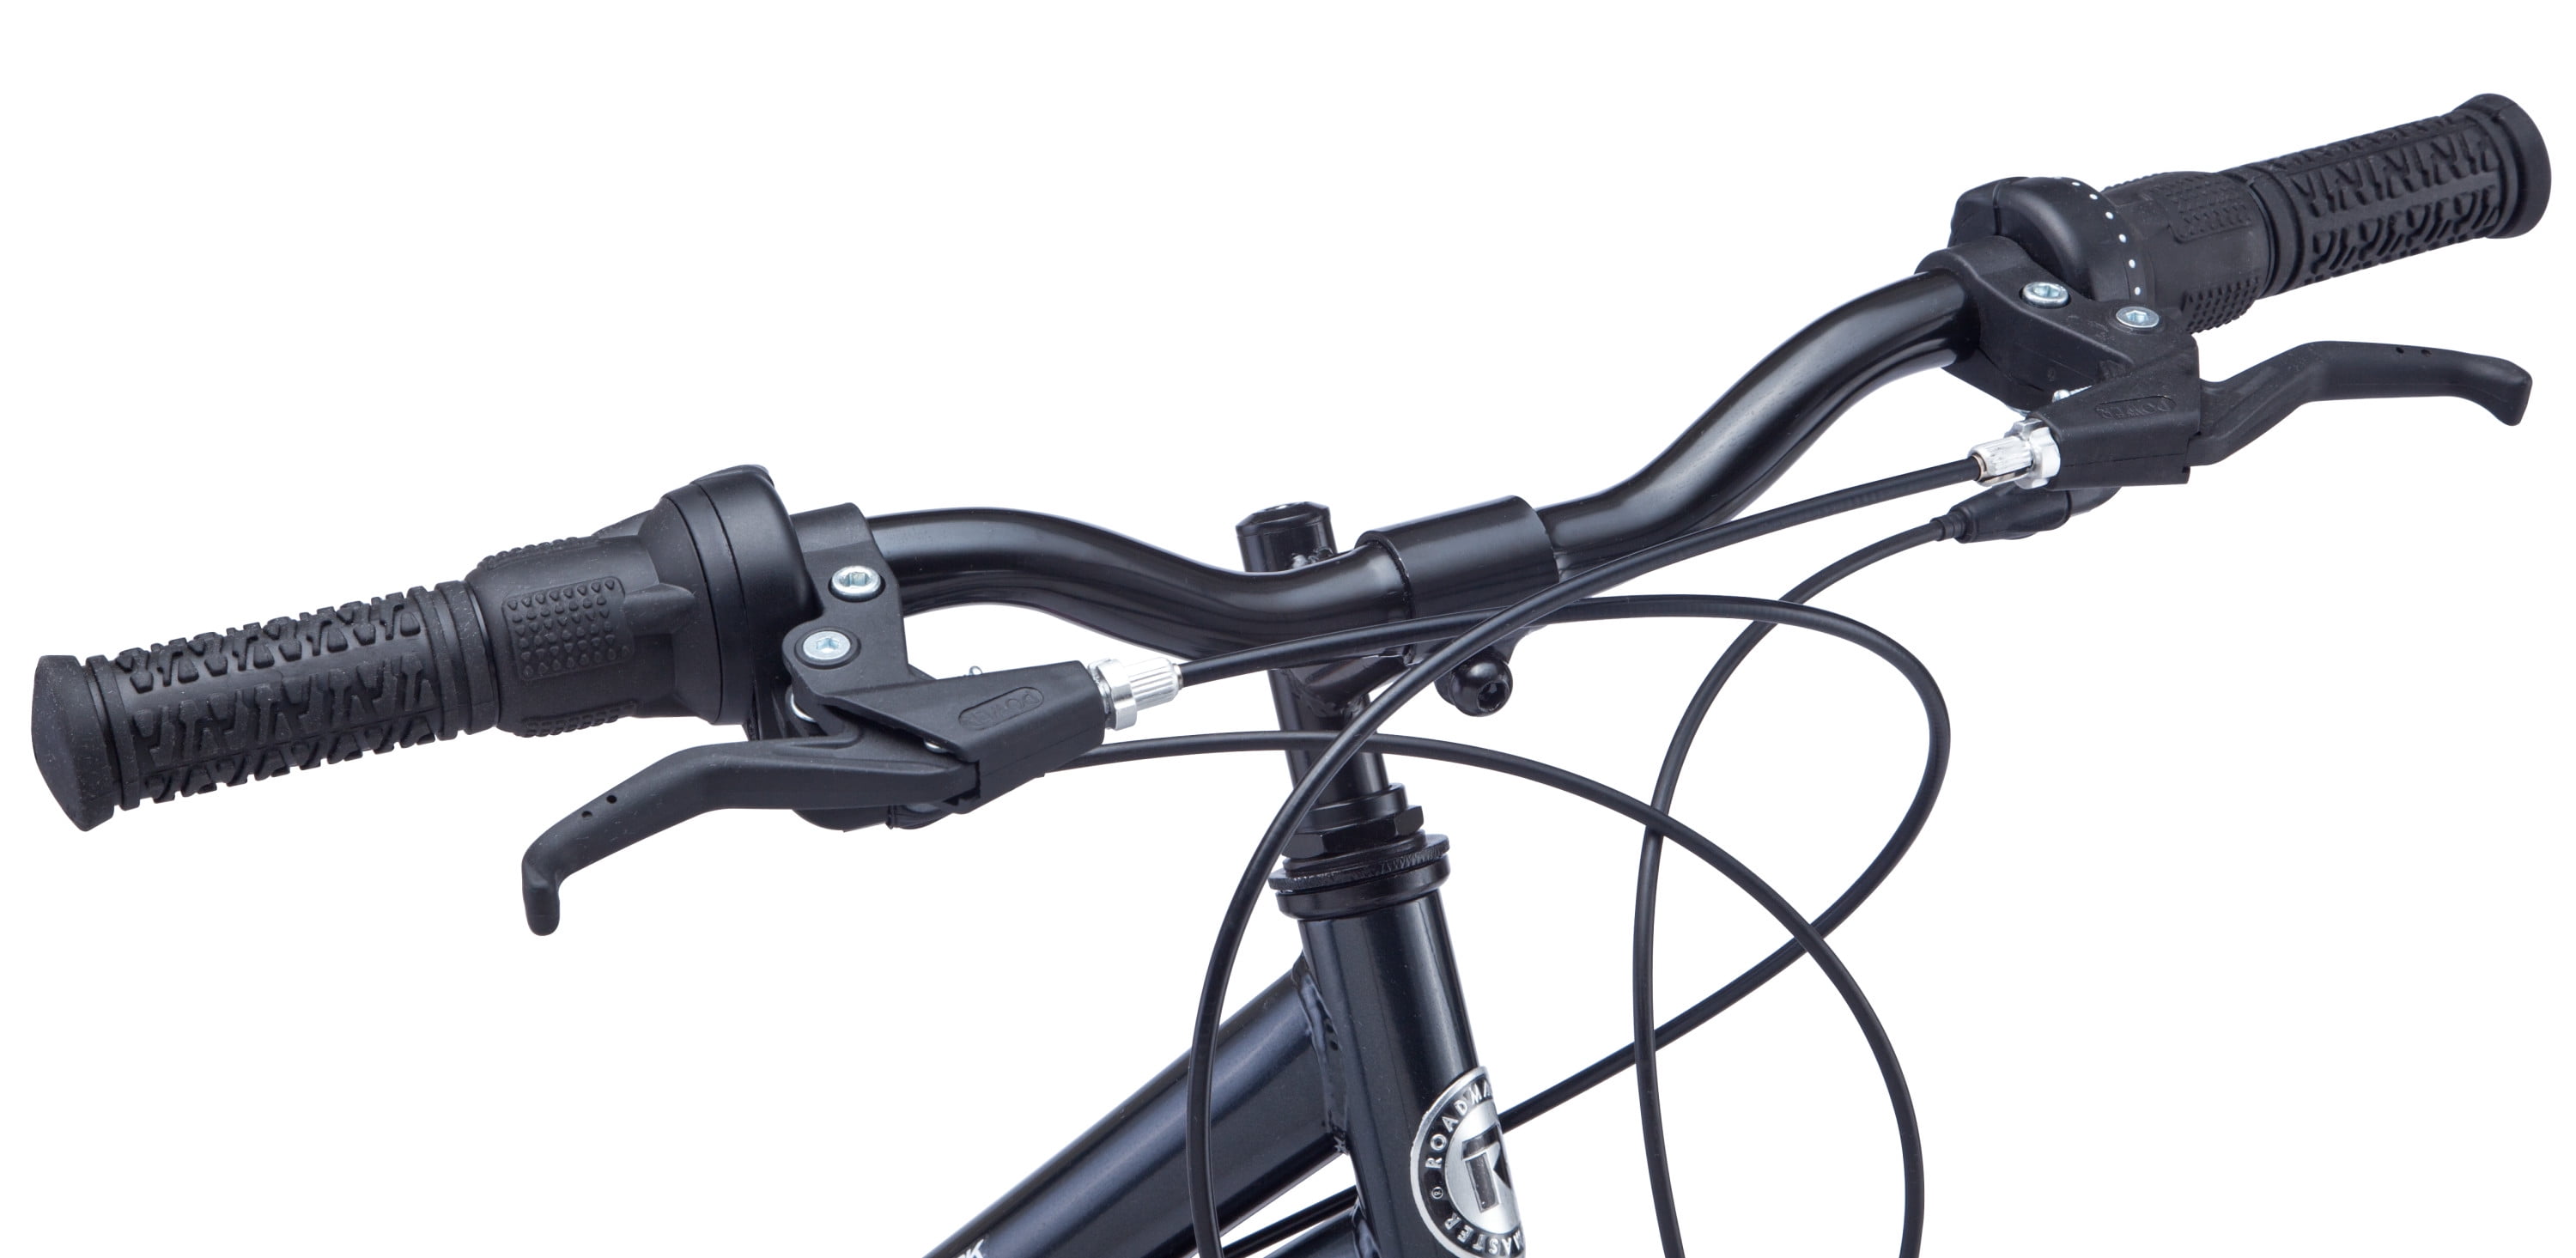 In Hand! Details about   Roadmaster Granite Peak Women's Mountain Bike Grey 26-inch wheels 